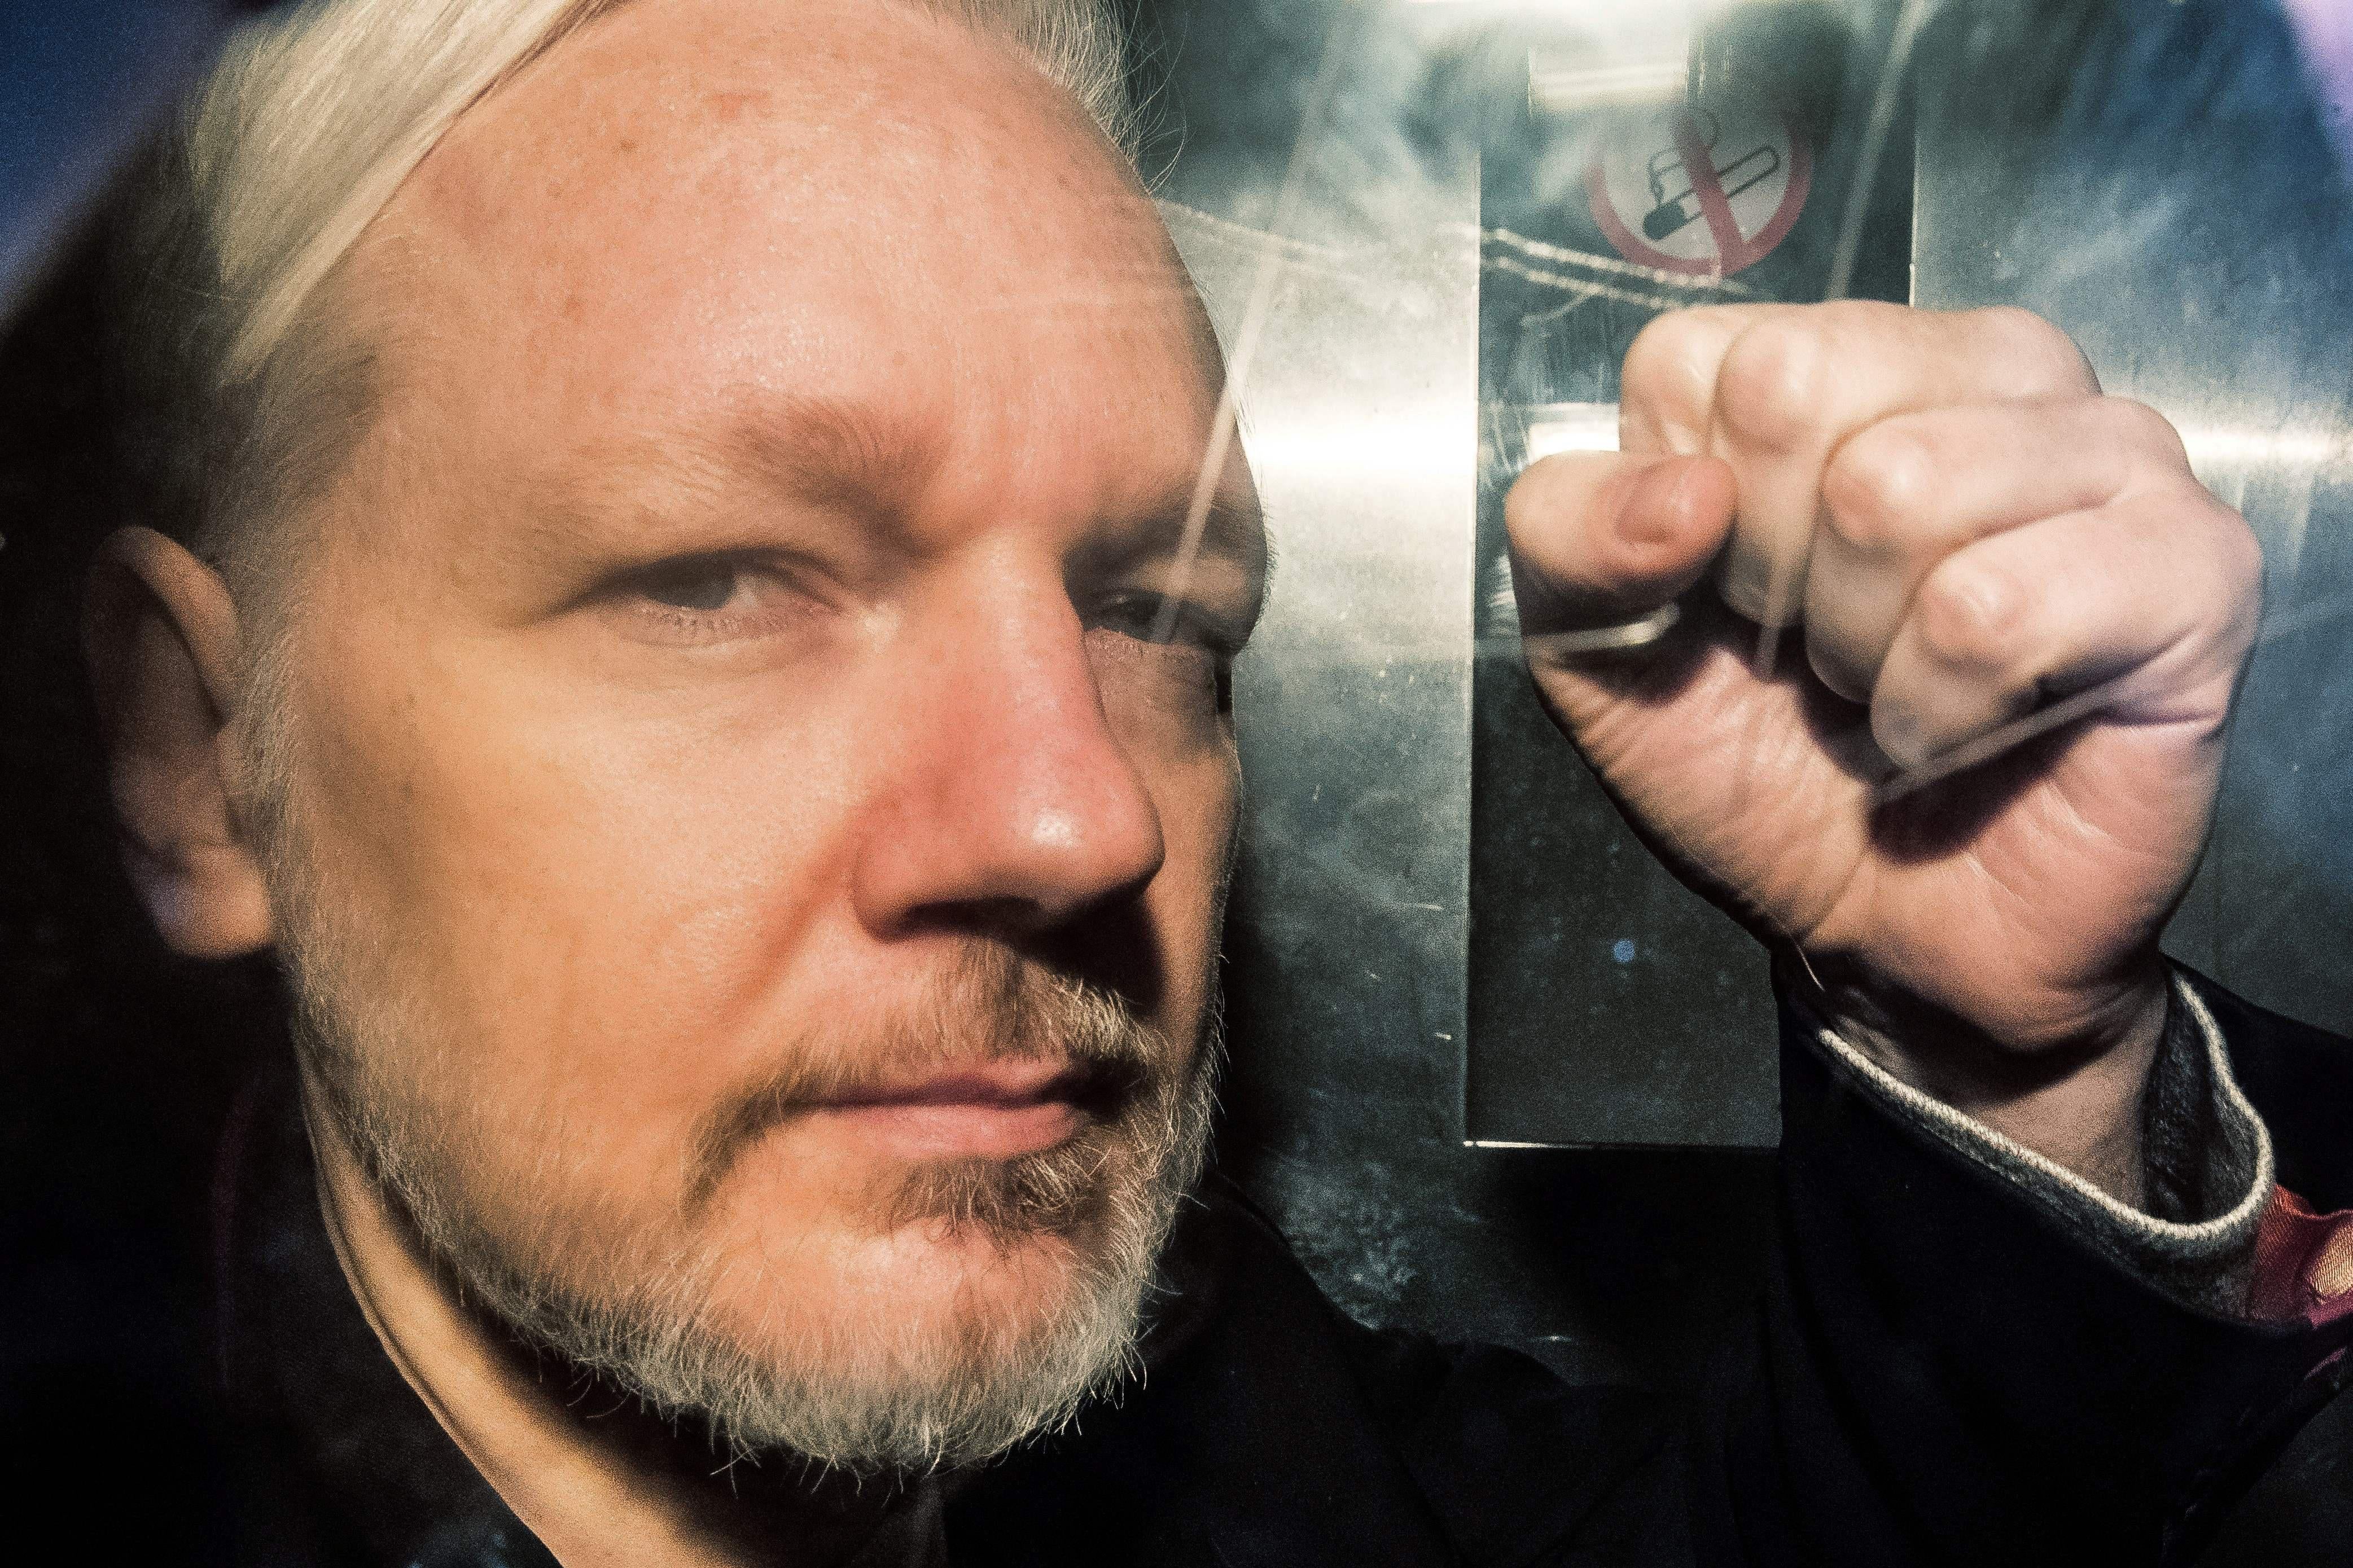 Julian Assange, seen up close through a window, gestures with a hand in a fist.